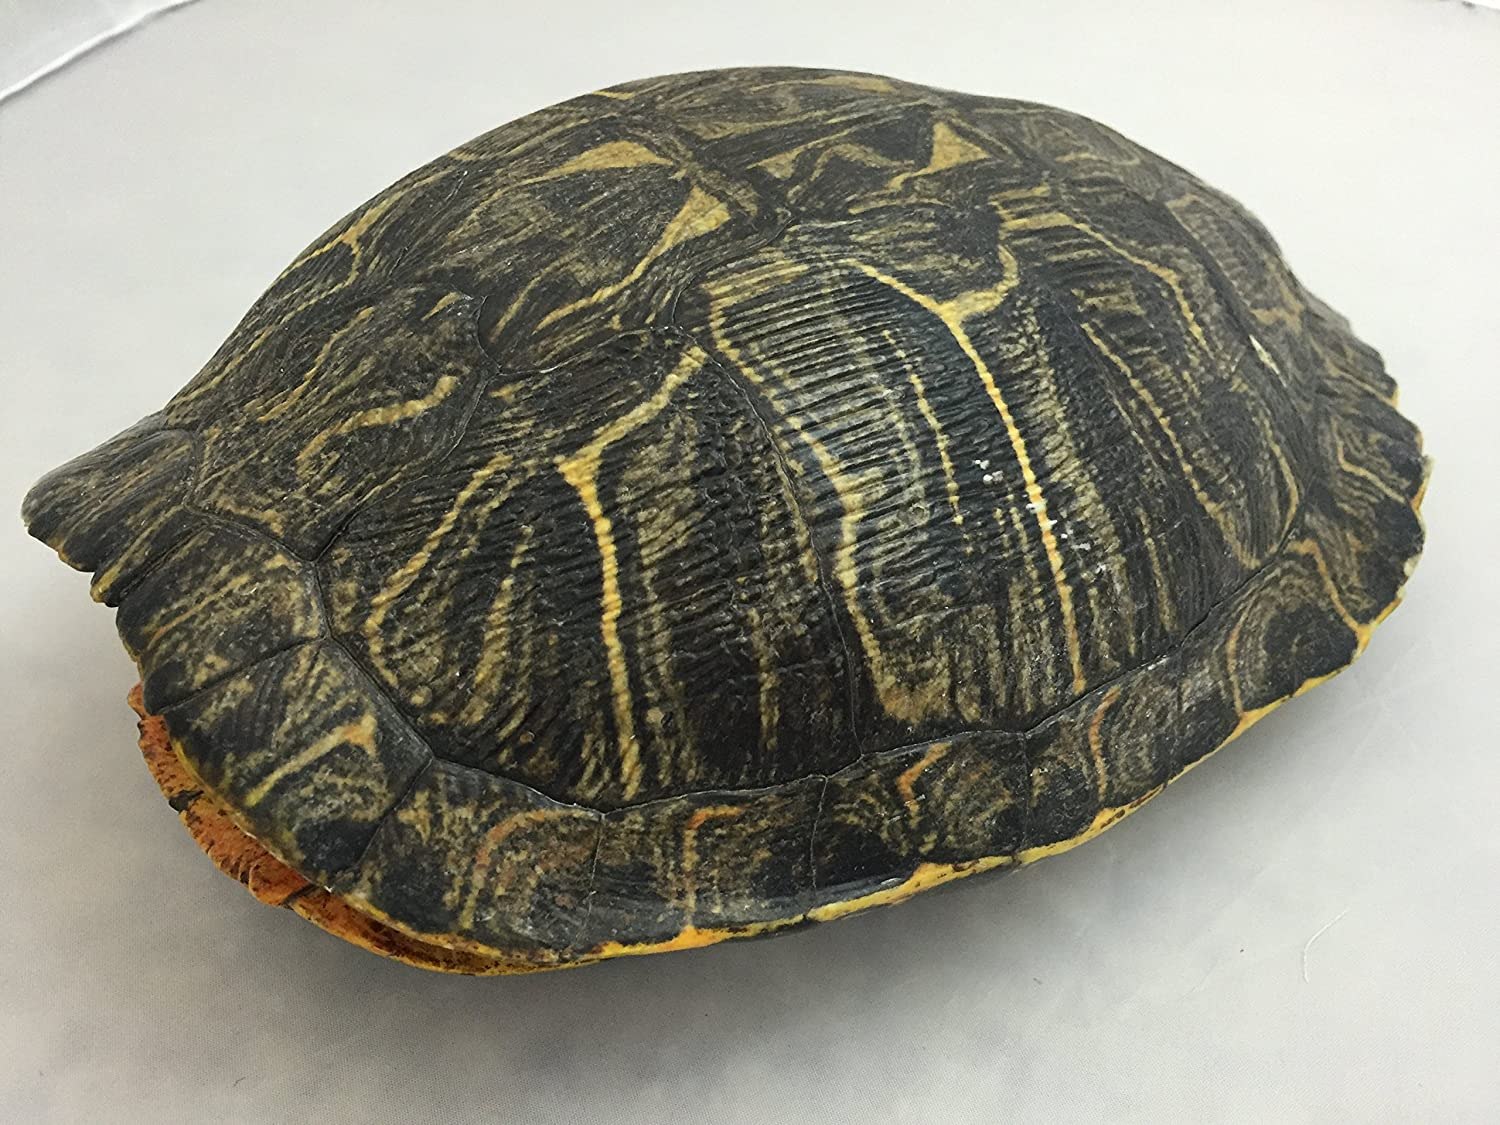 Turtle shell. Панцирь черепахи снизу. Черепаший панцирь. Черепаха карапакса. Панцирь черепахи.